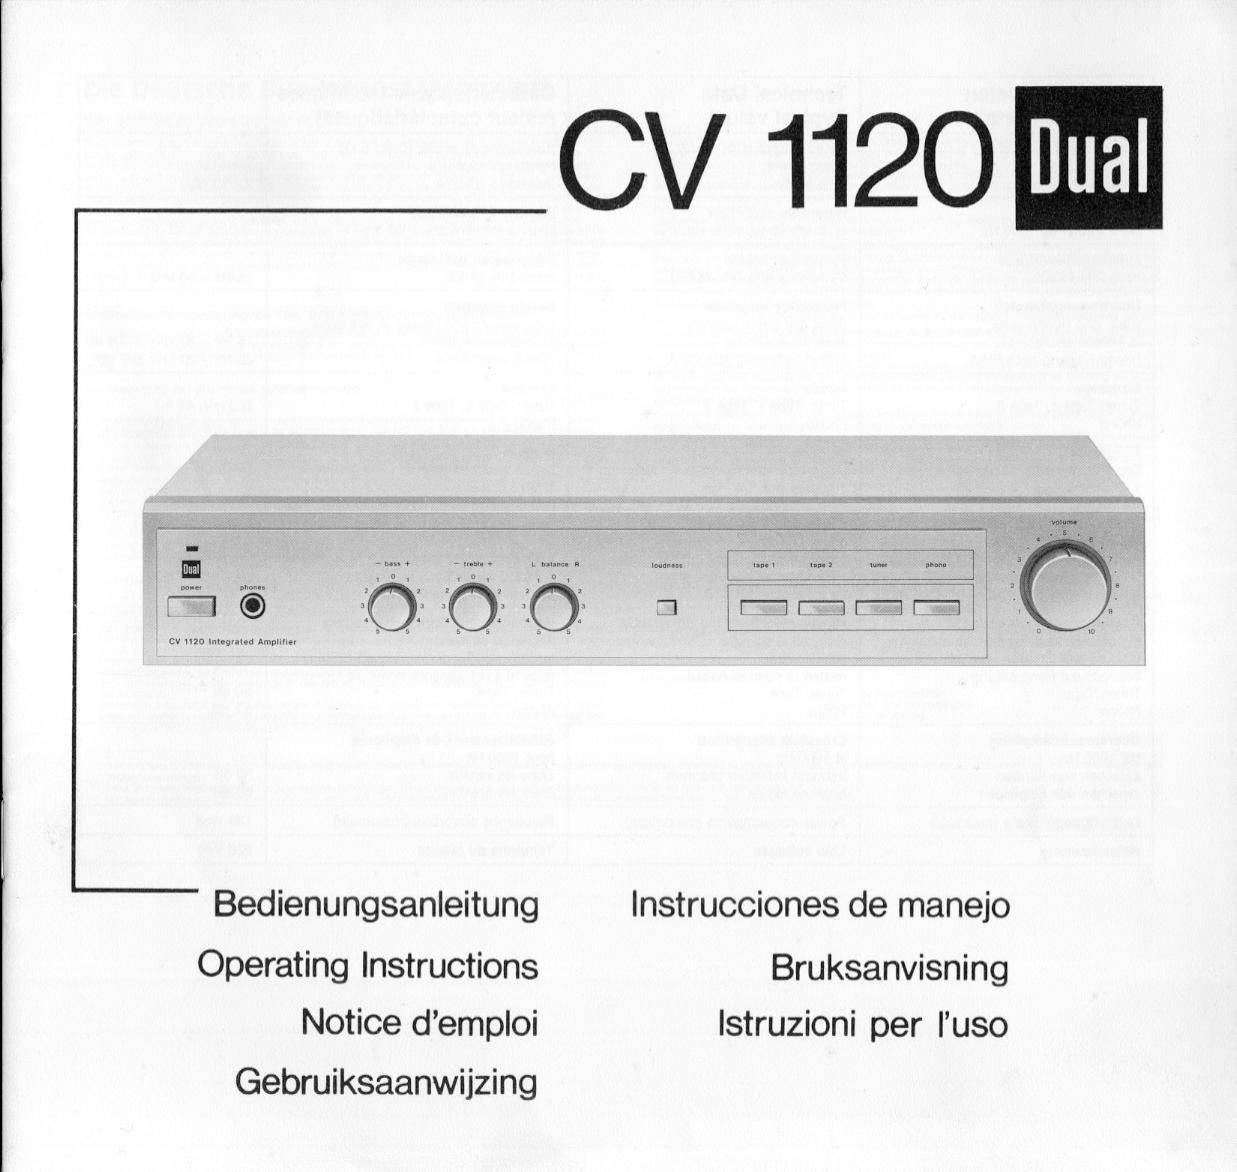 Dual CV 1120